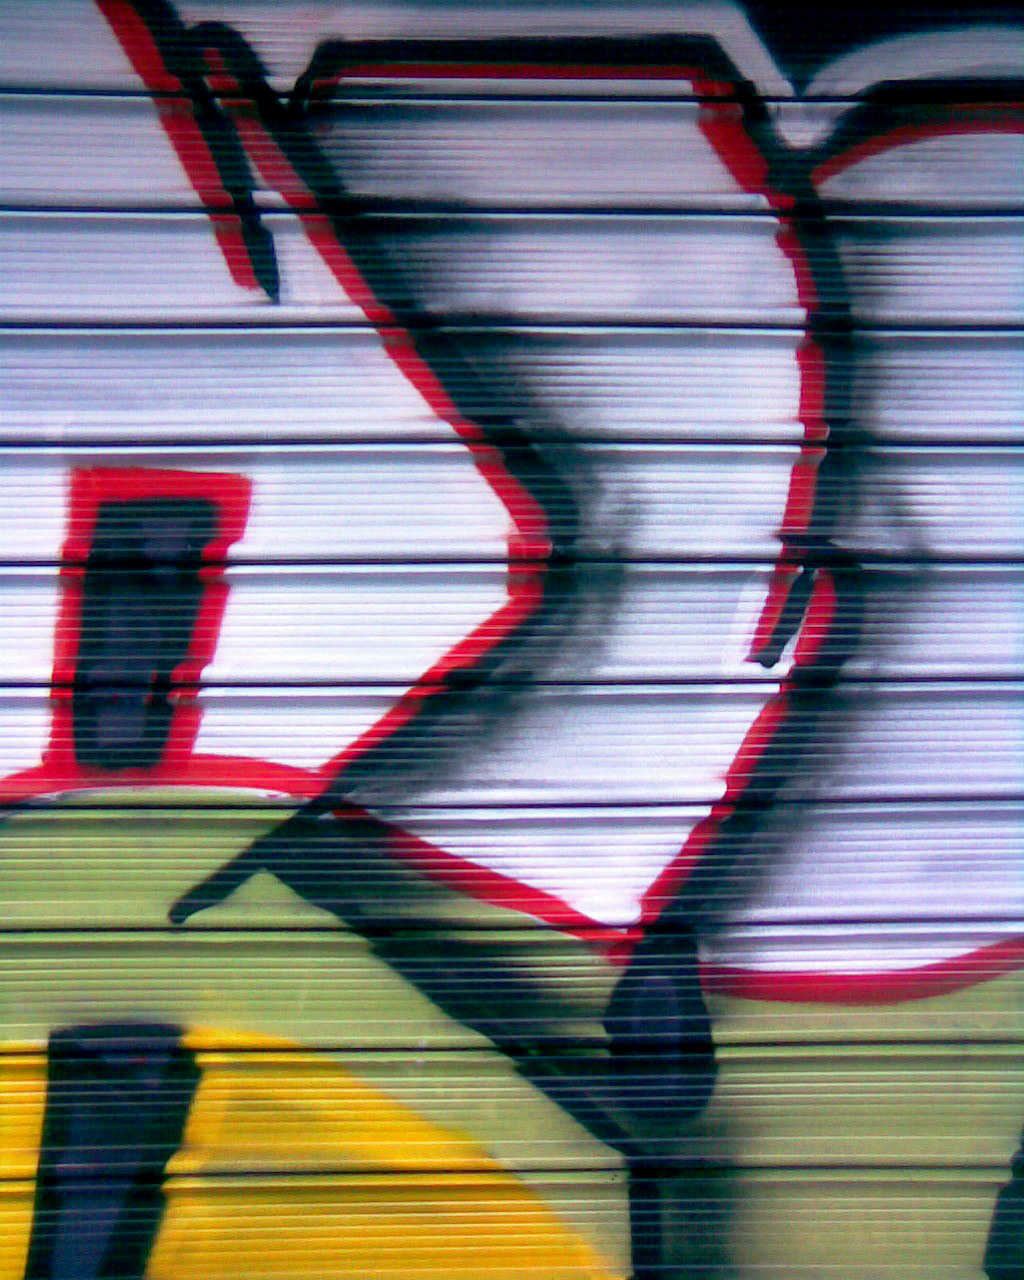 Graffiti promotional campaign